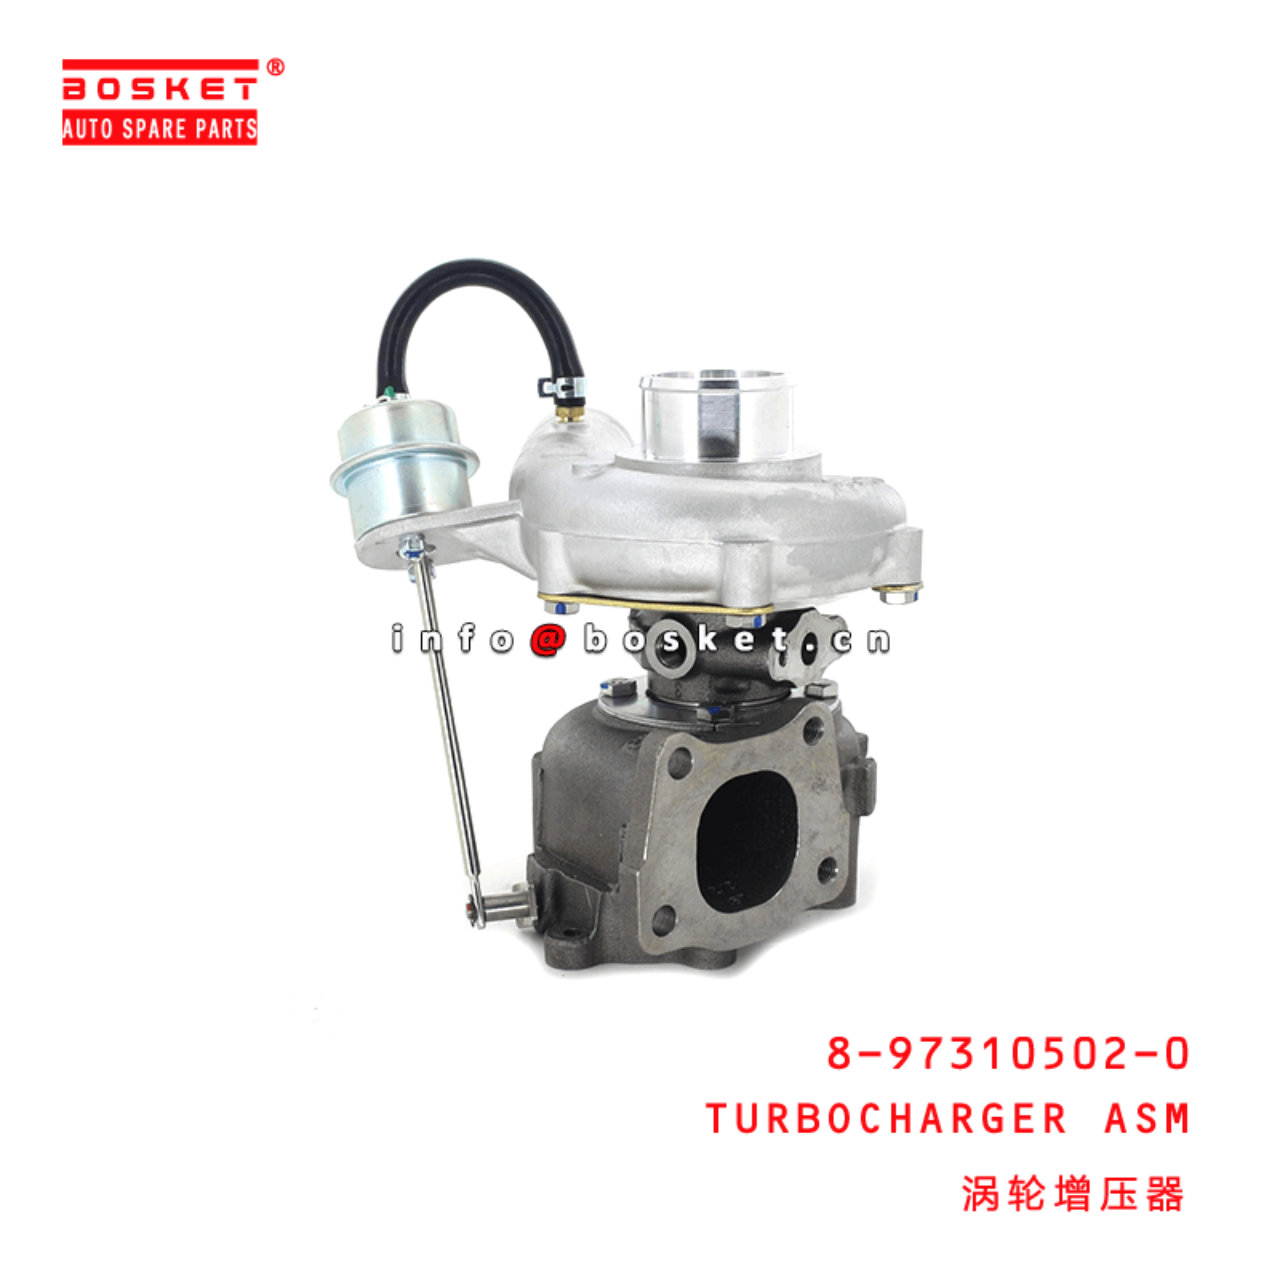 8-97310502-0 Turbocharger Assembly 8973105020 Suitable for ISUZU NPR 4HK1-T